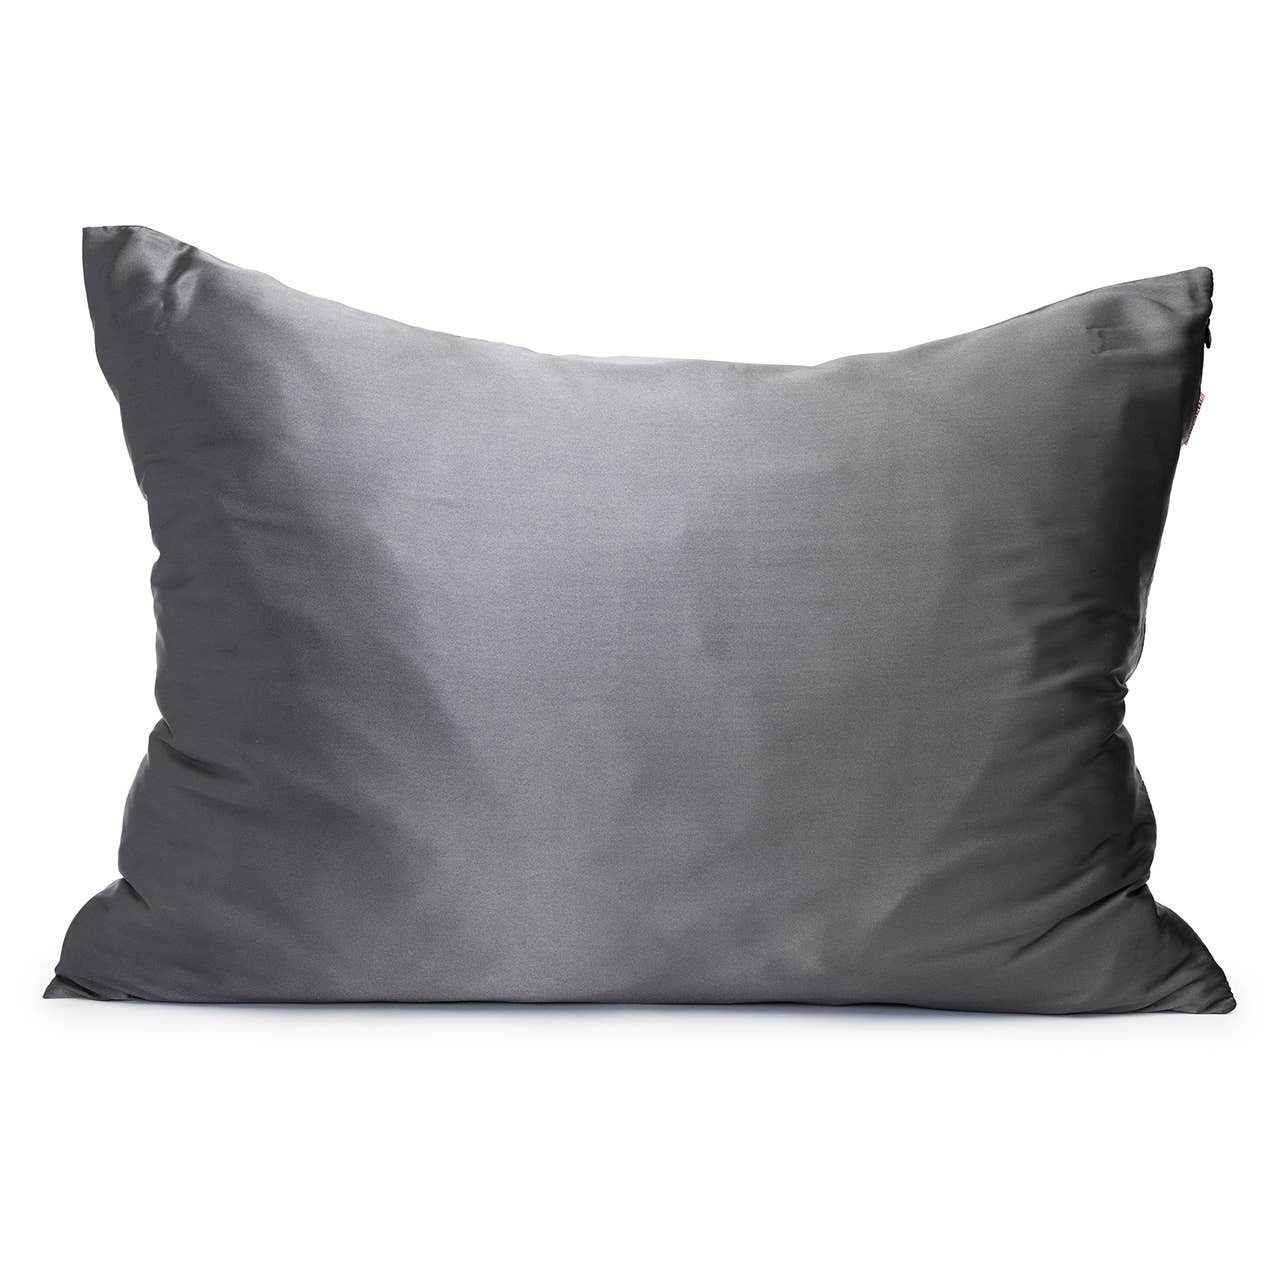 KITSCH - Satin Pillowcase - Charcoal